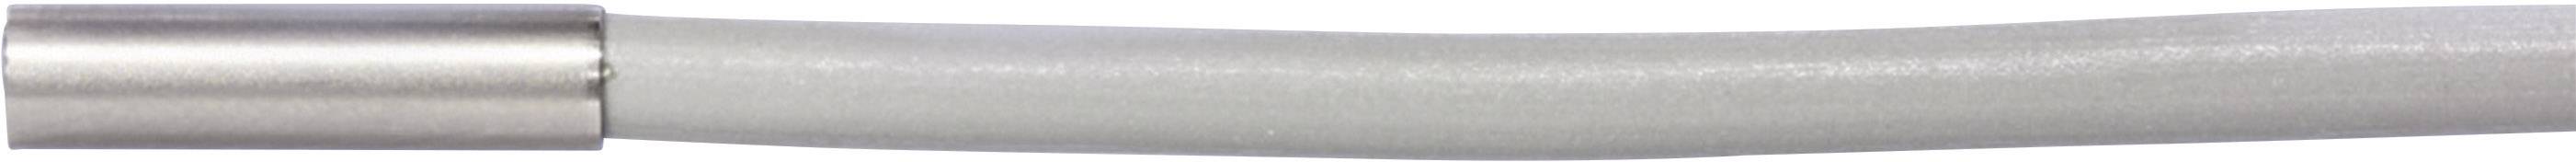 CONTRINEX Induktiver Näherungsschalter 3 mm bündig PNP DW-AD-623-03-960 (320 320 003)